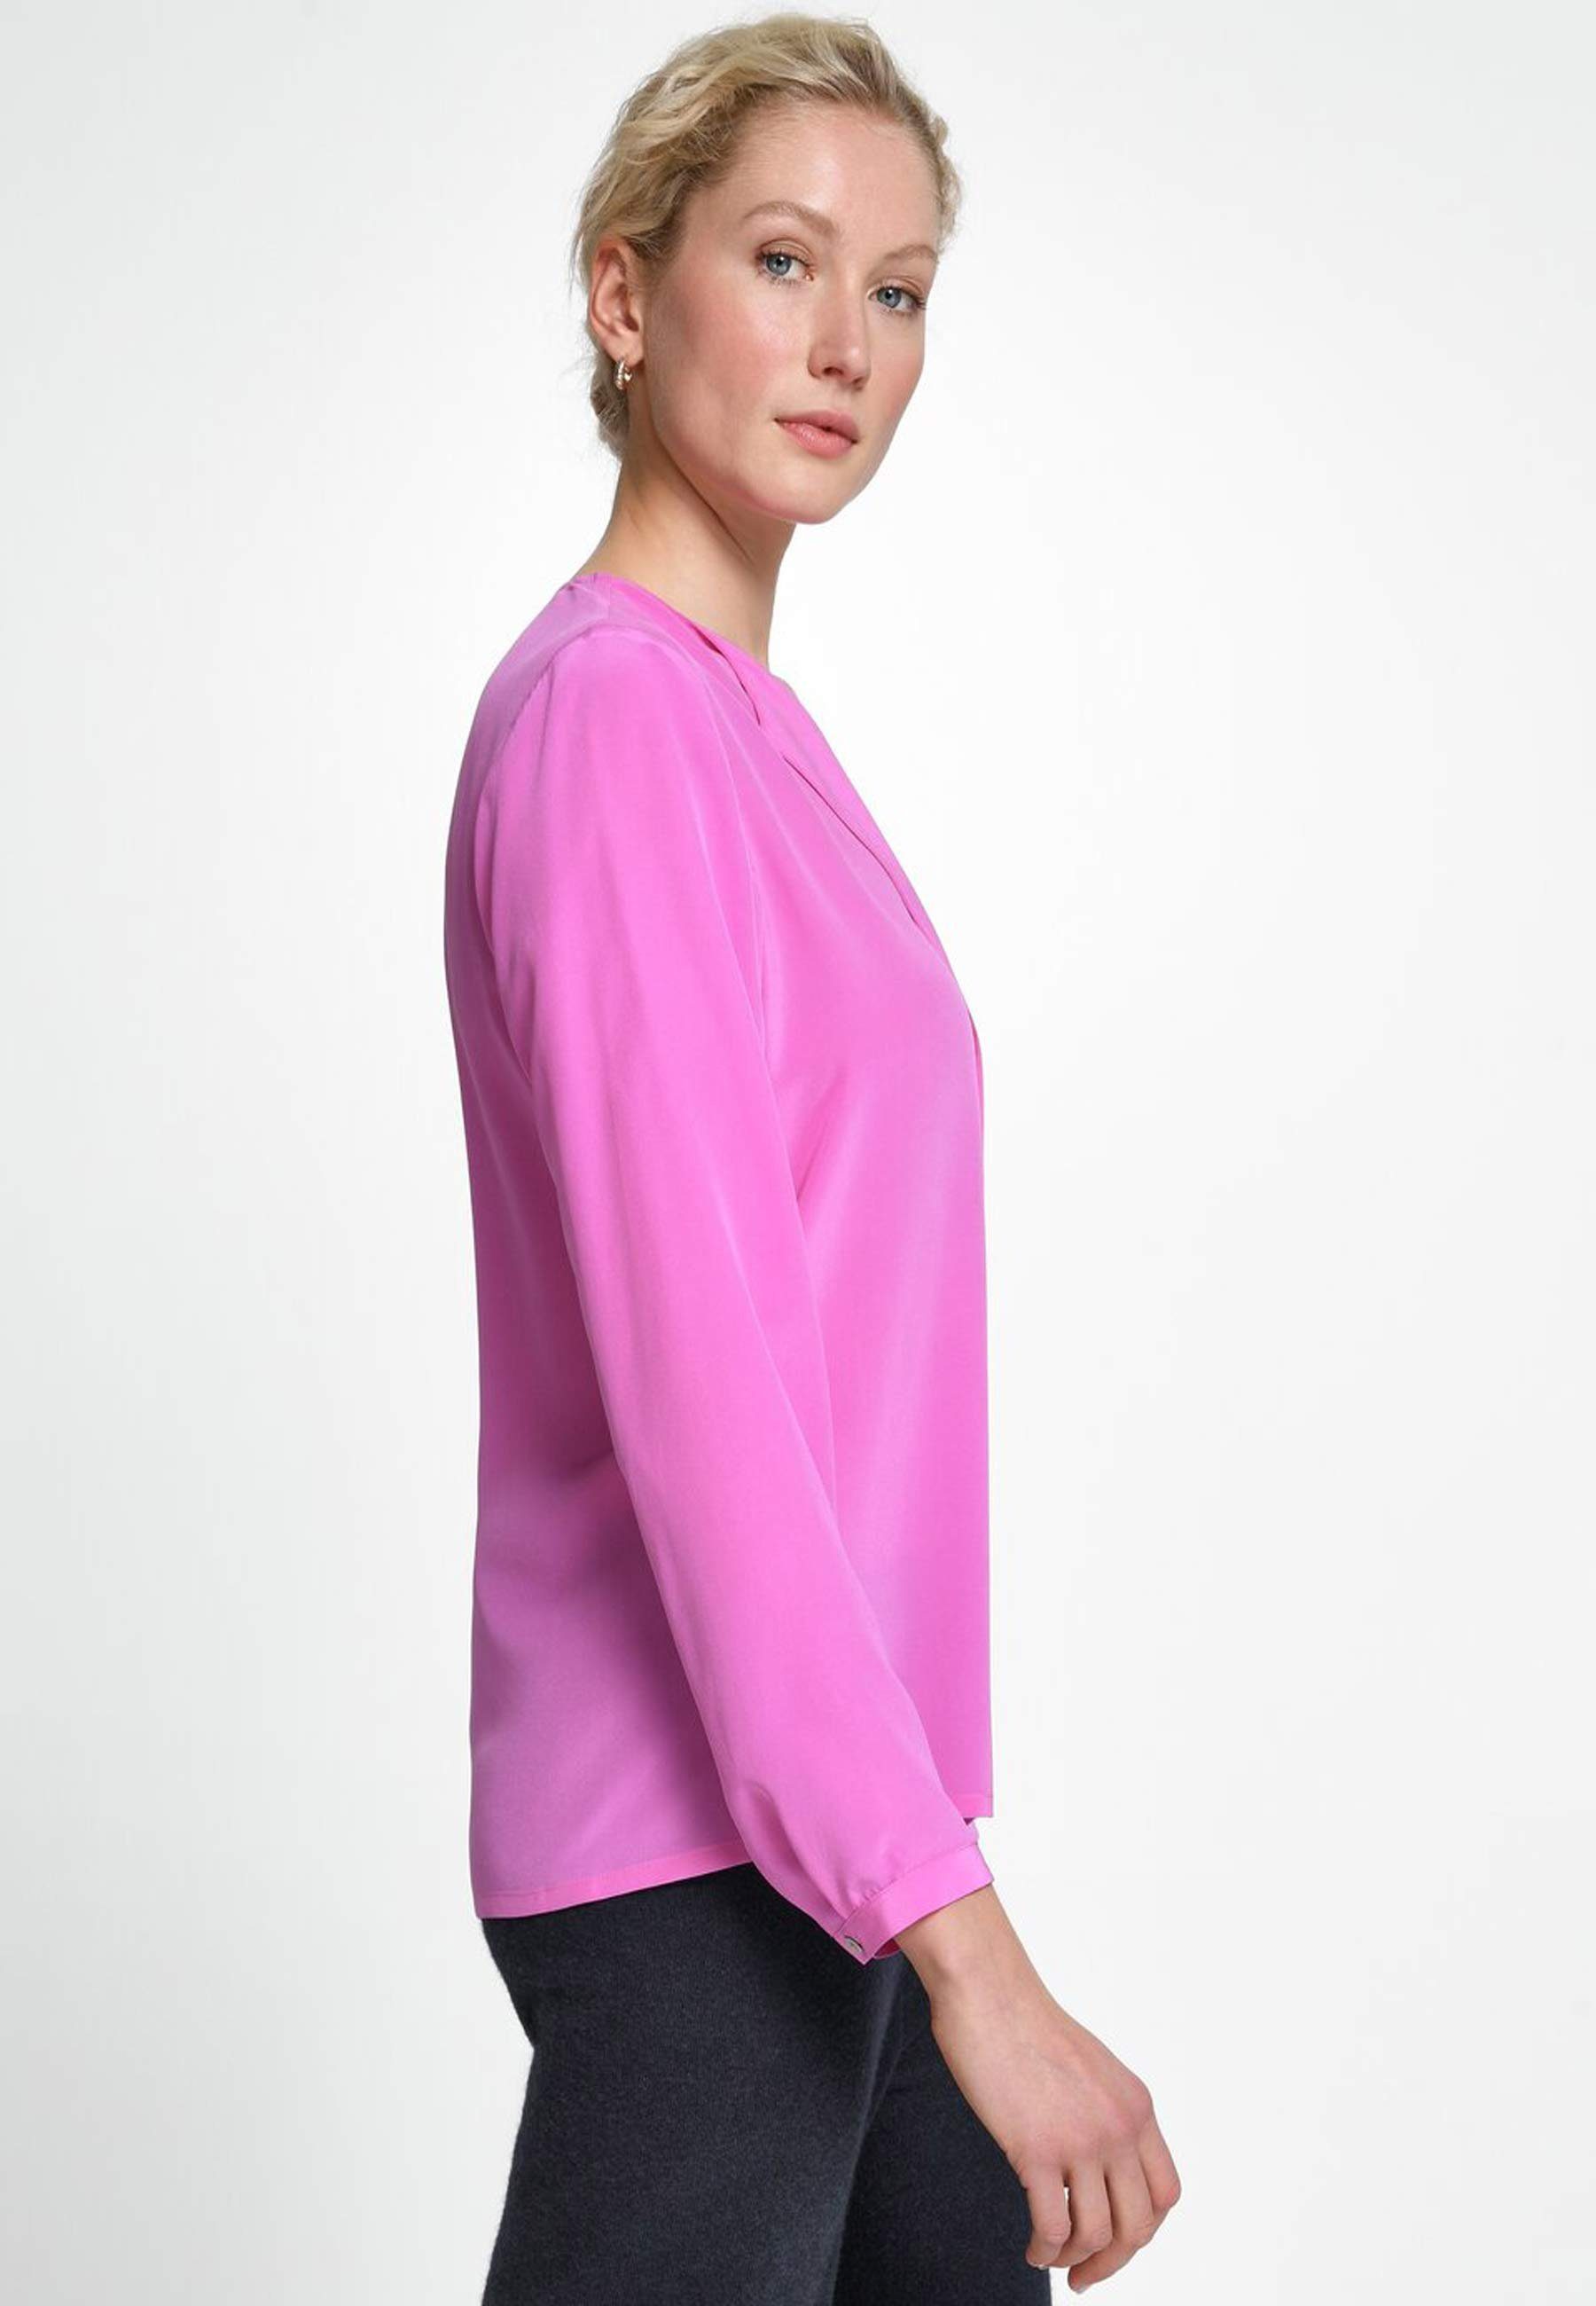 Design ORCHIDEE mit klassischem Bluse Silk Klassische include